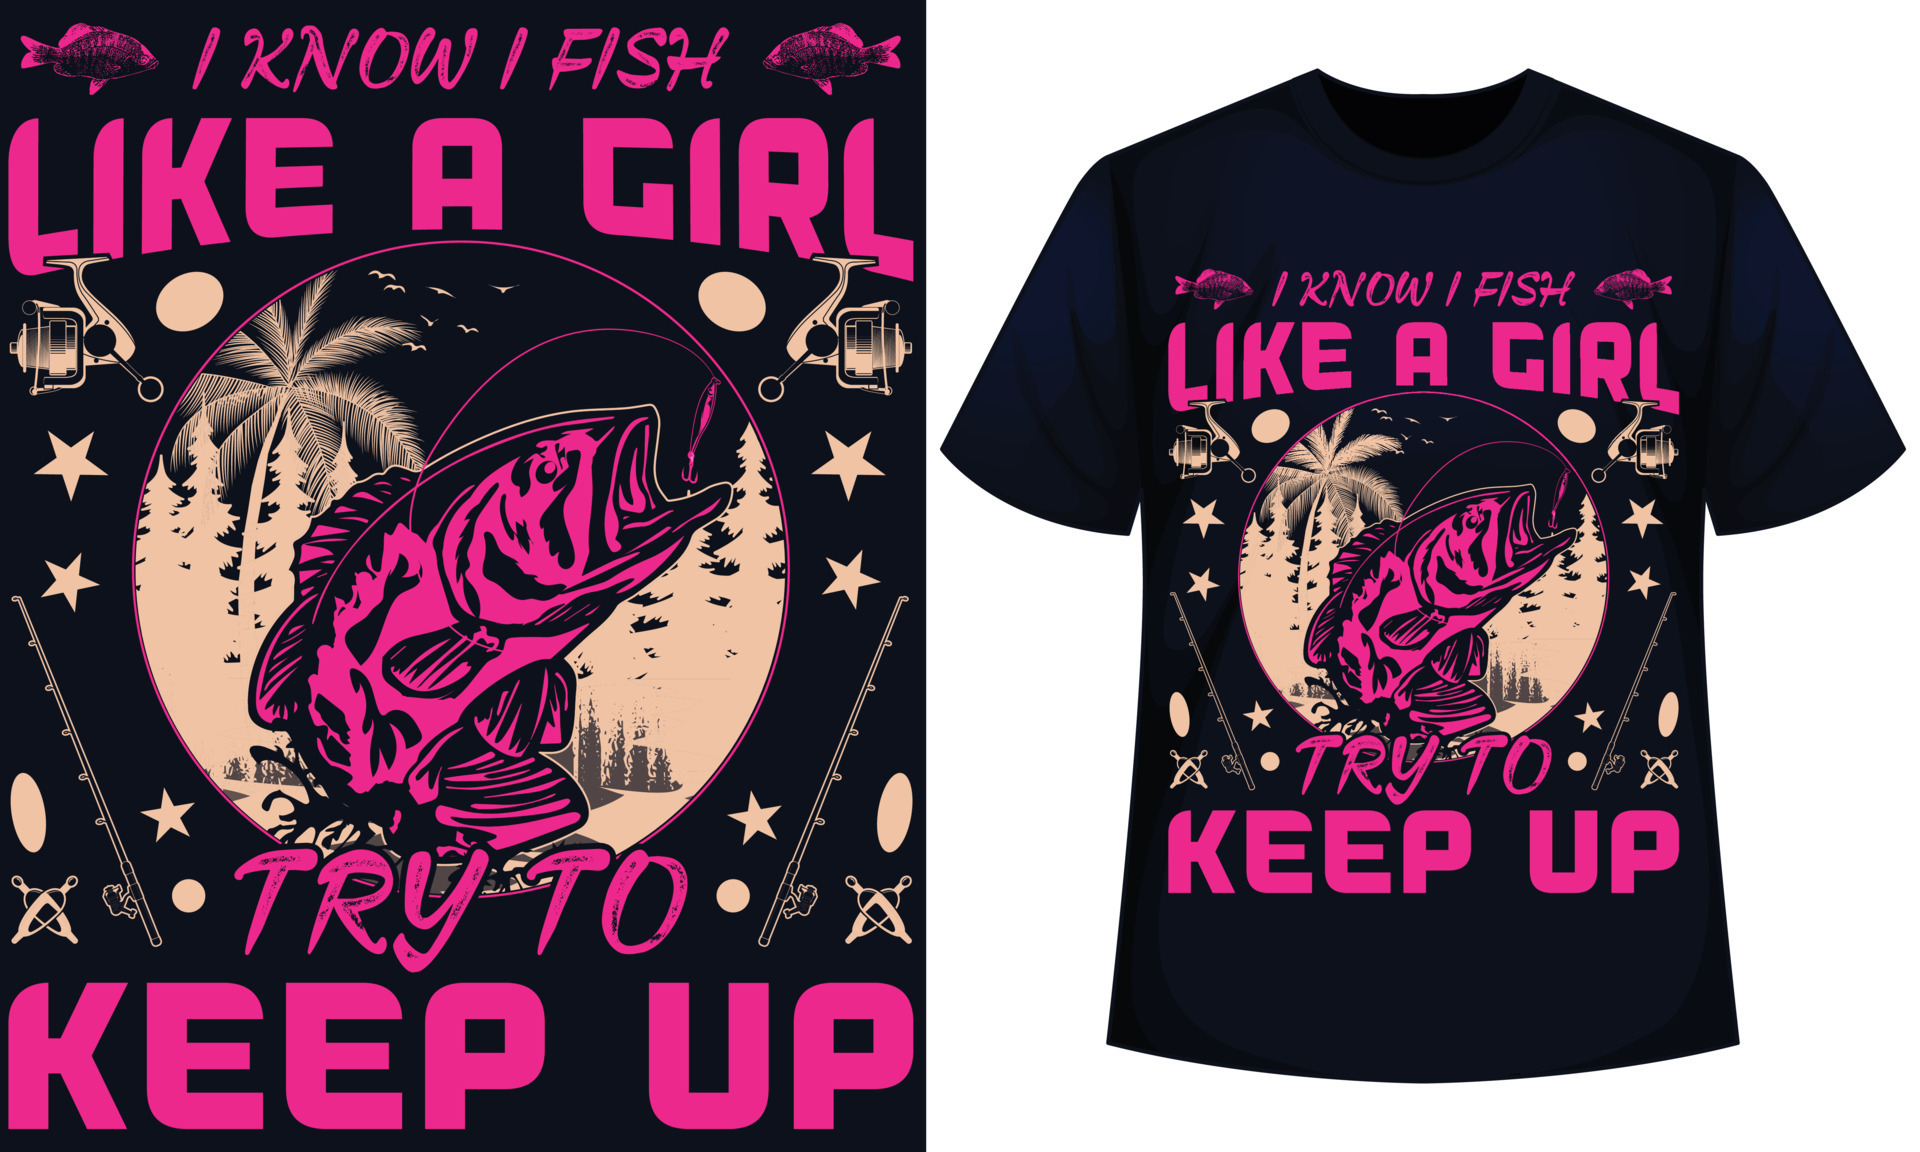 I Know I Fish Like A Girl Try to Keep T-Shirt